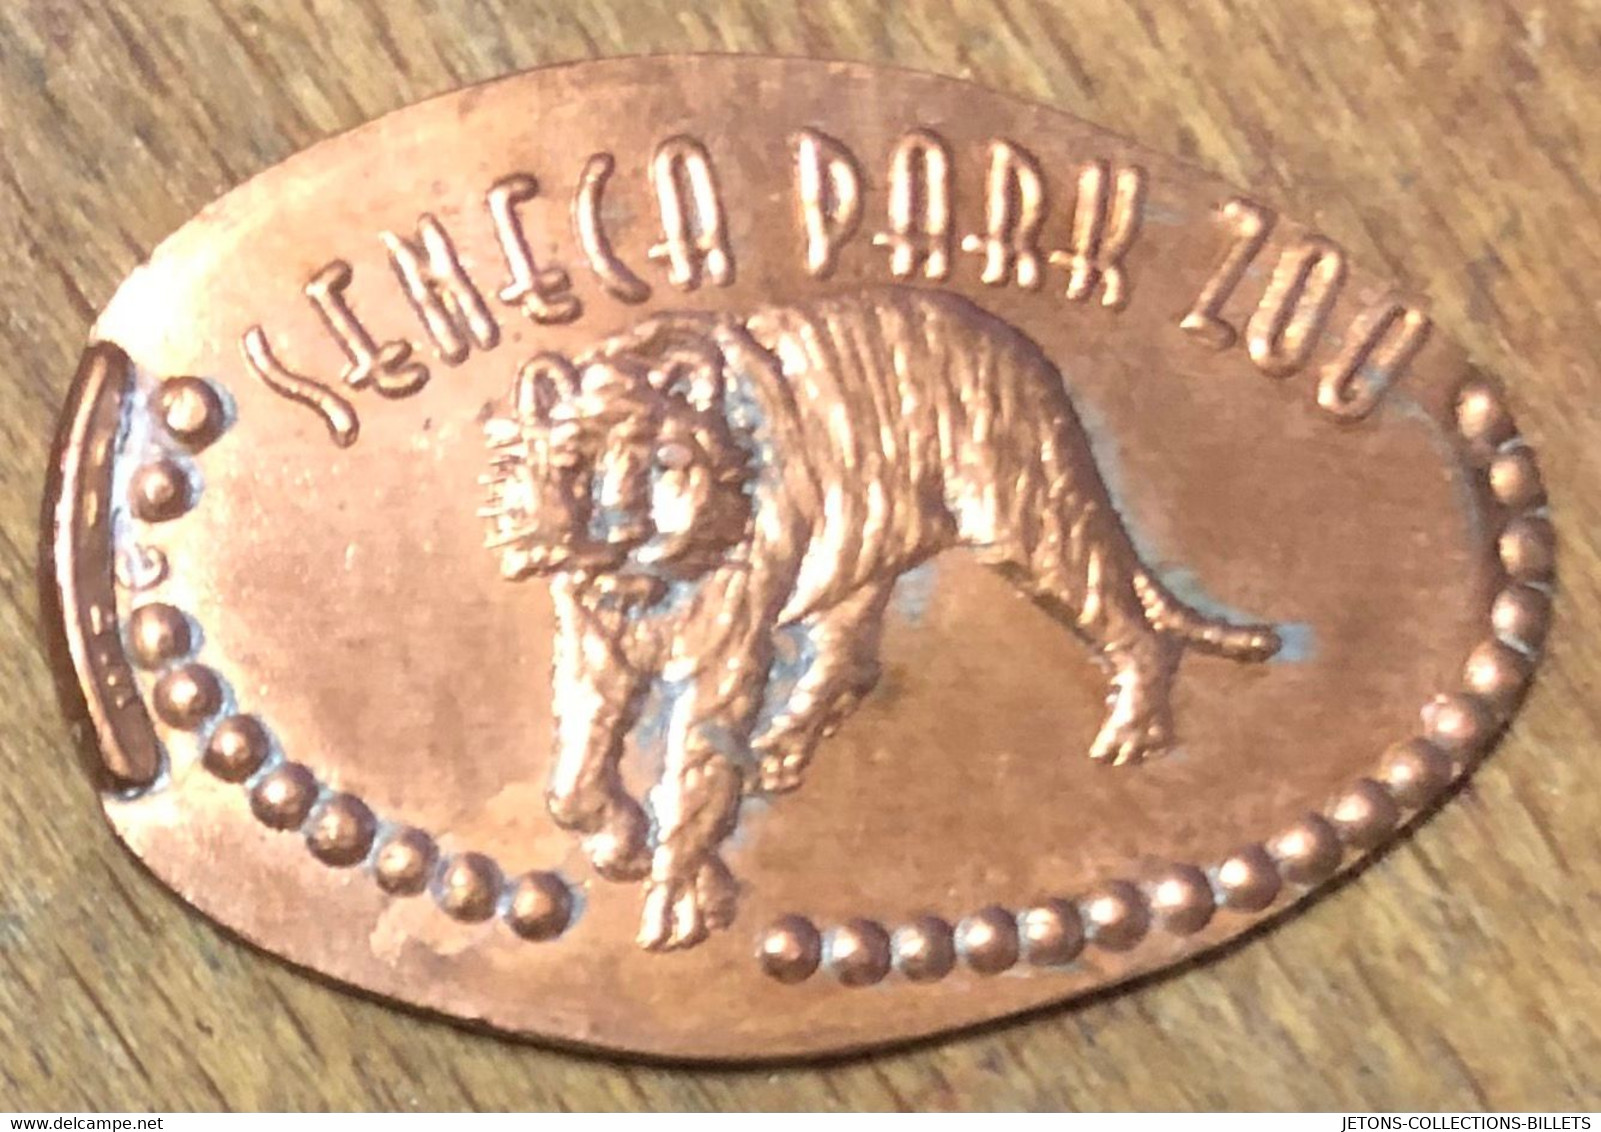 ÉTATS-UNIS USA SENECA PARK ZOO TIGRE PIÈCE ÉCRASÉE PENNY ELONGATED COIN MEDAILLE TOURISTIQUE MEDALS TOKENS - Monedas Elongadas (elongated Coins)